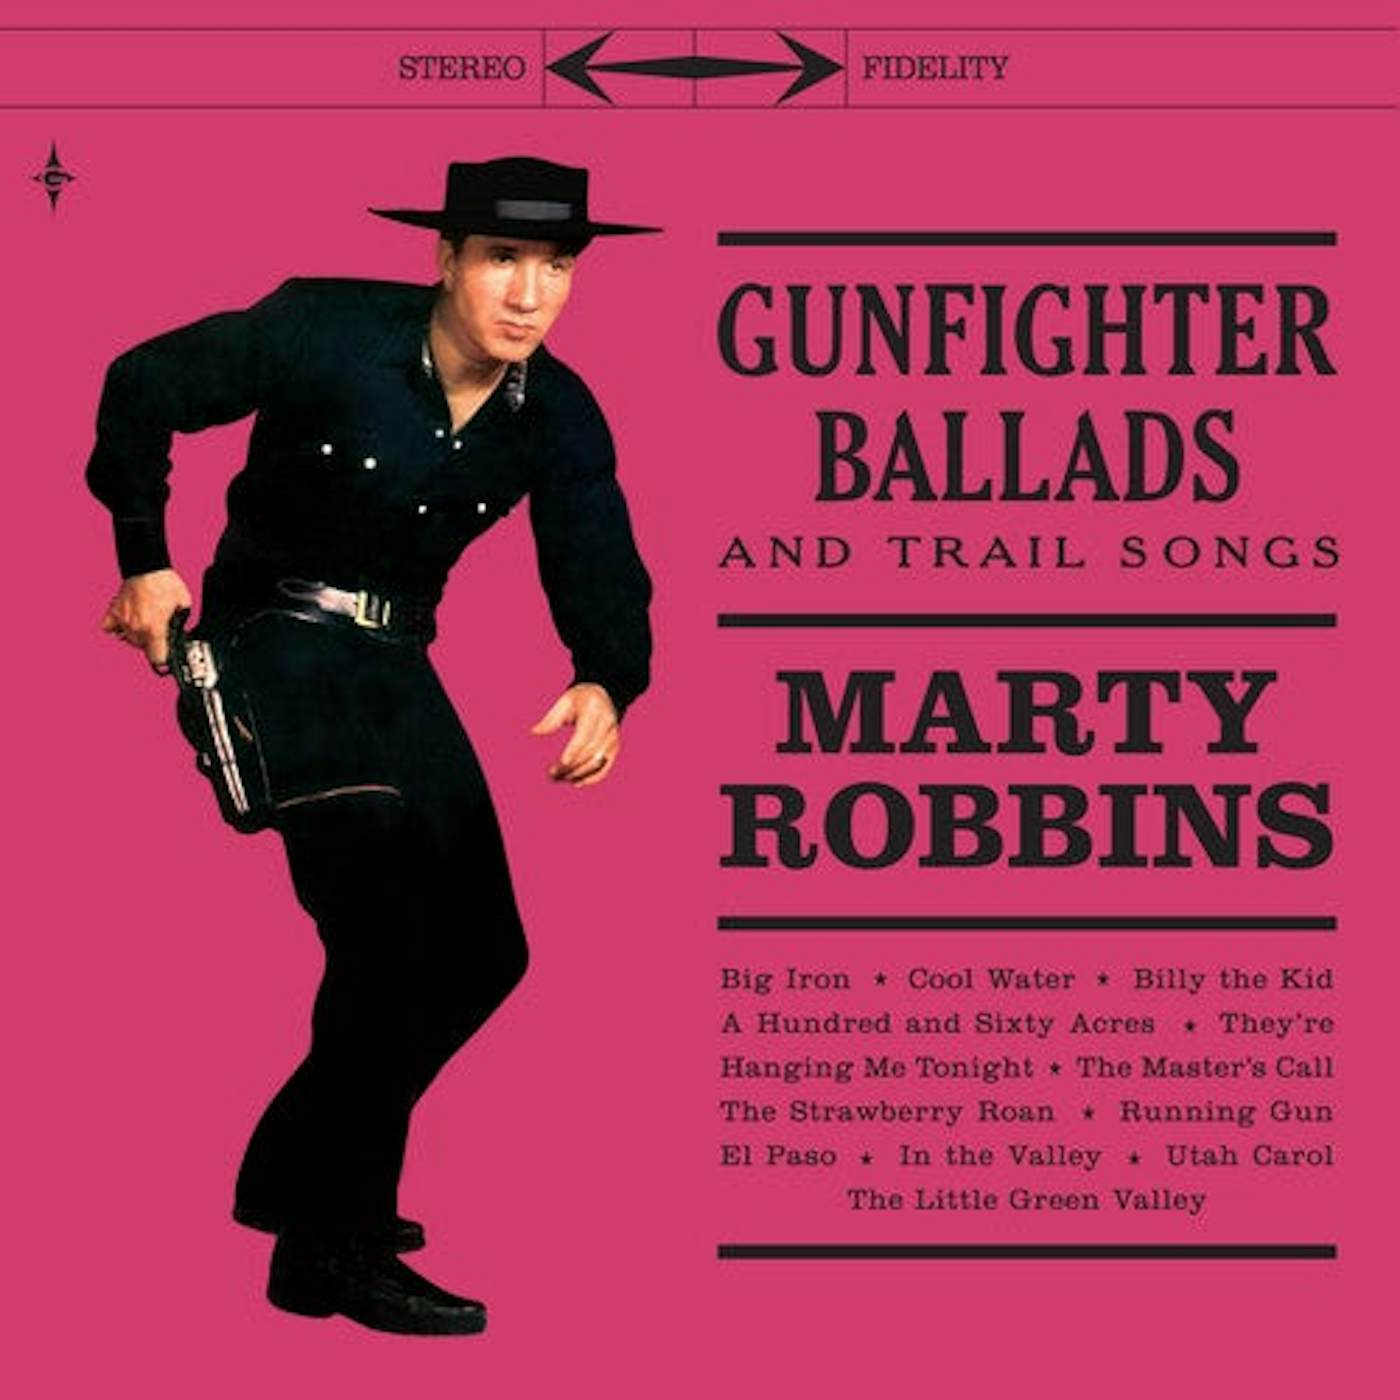 Marty Robbins Gunfighter Ballads & Trail Songs Vinyl Record